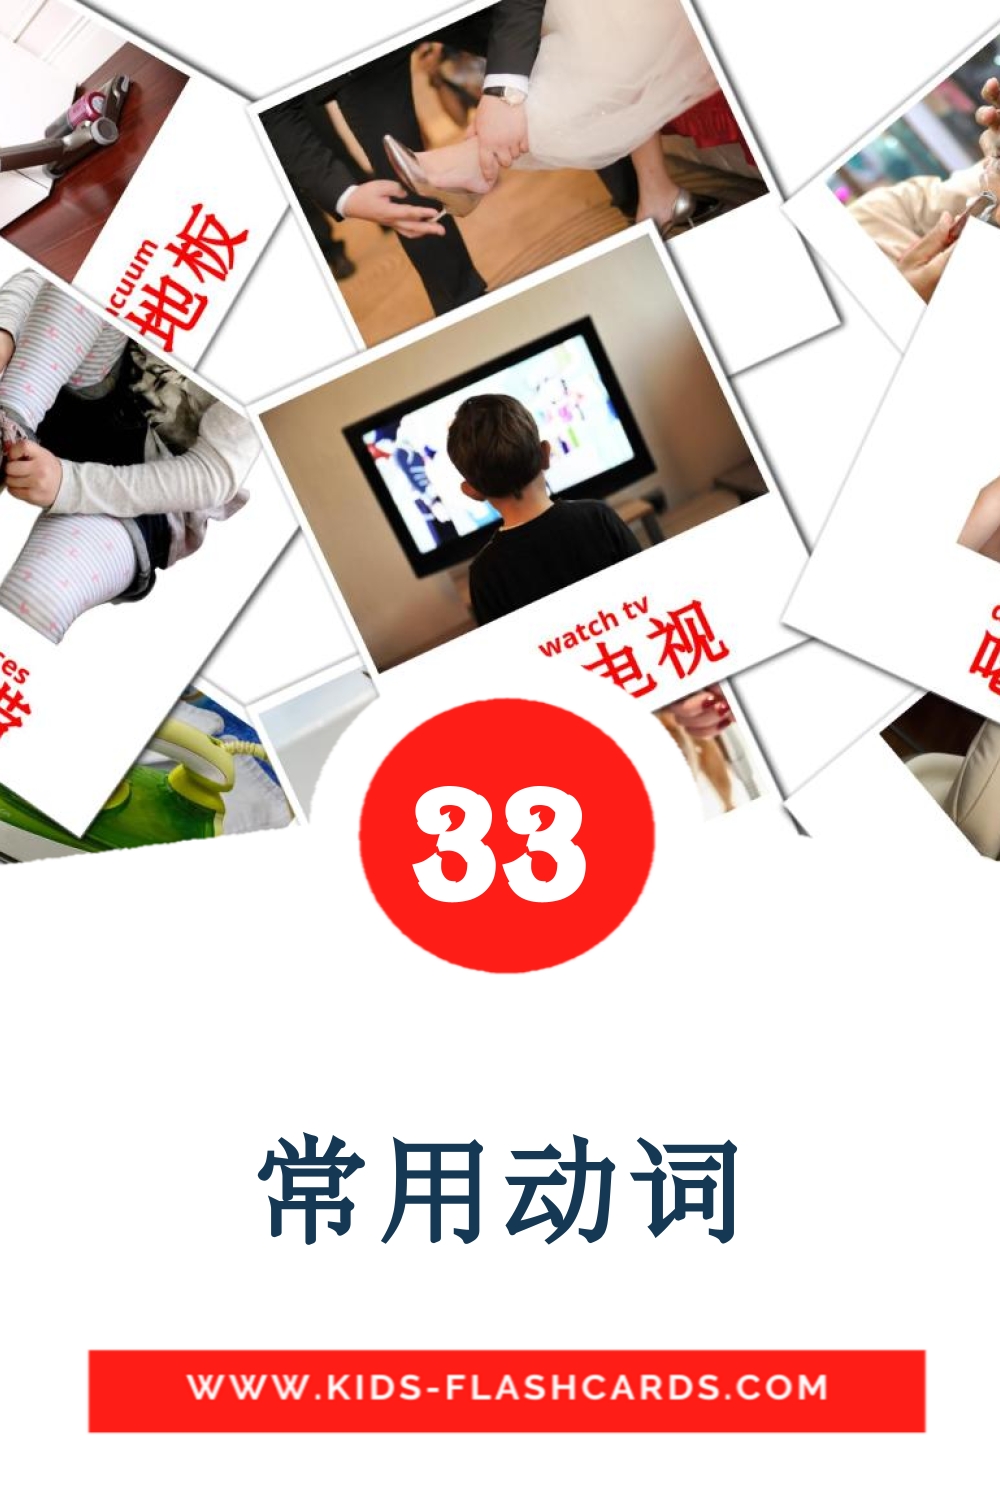 33 常用动词 Bildkarten für den Kindergarten auf Chinesisch(Vereinfacht)